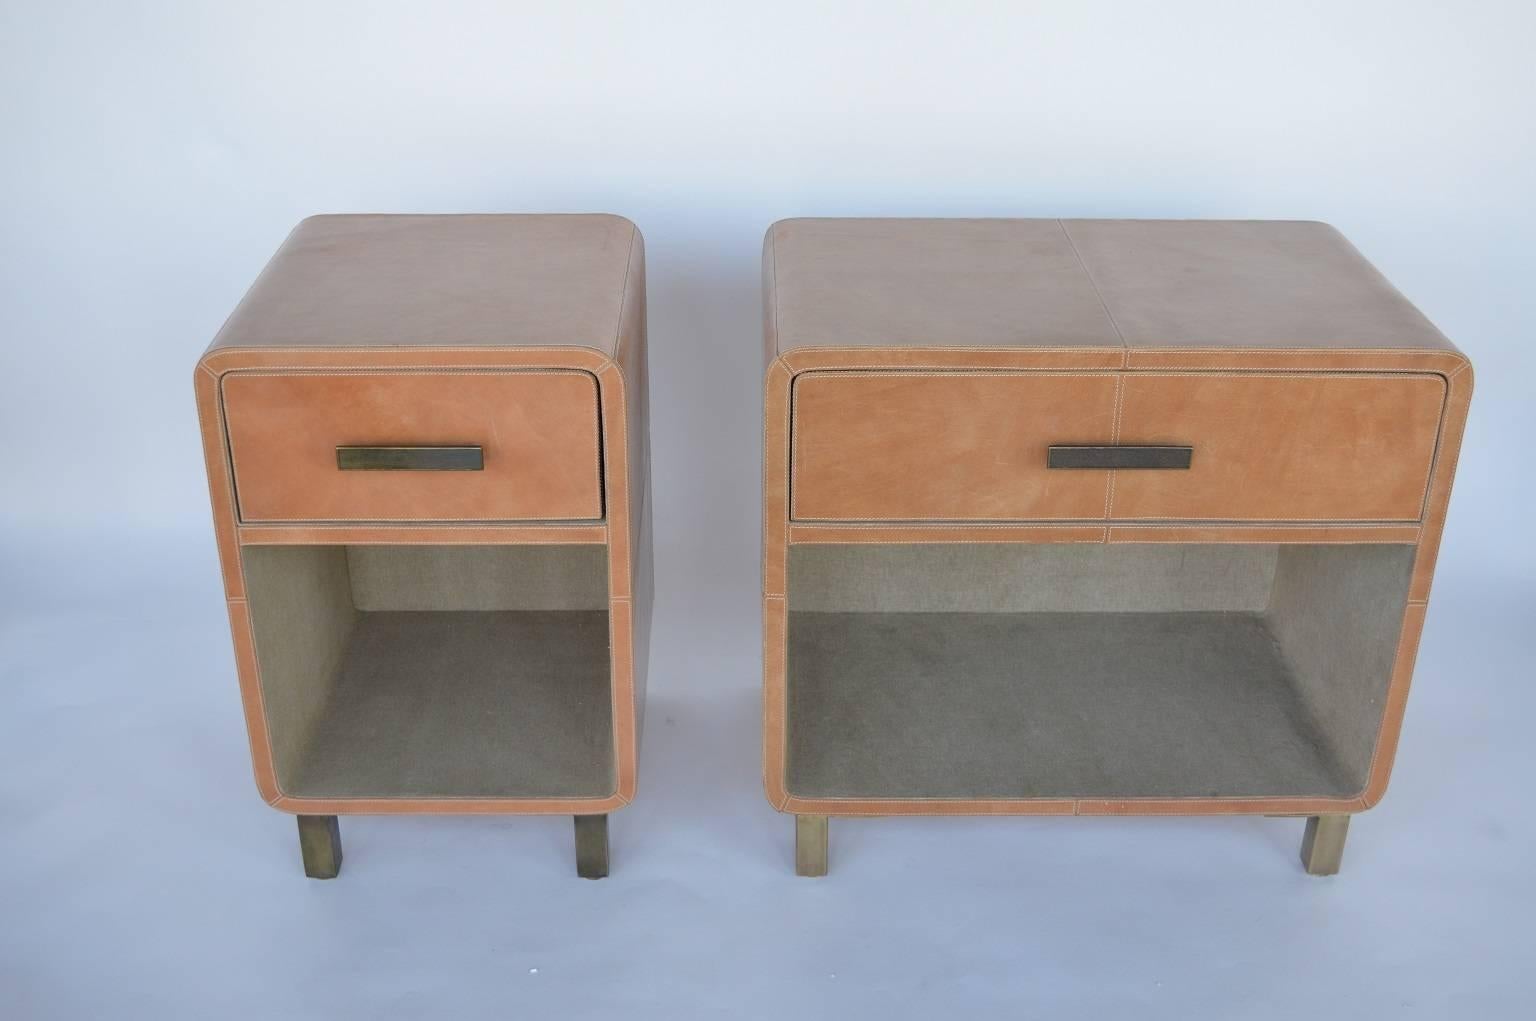 Pair of leather upholstered Italian nightstands.

Smaller nightstand measures: 28